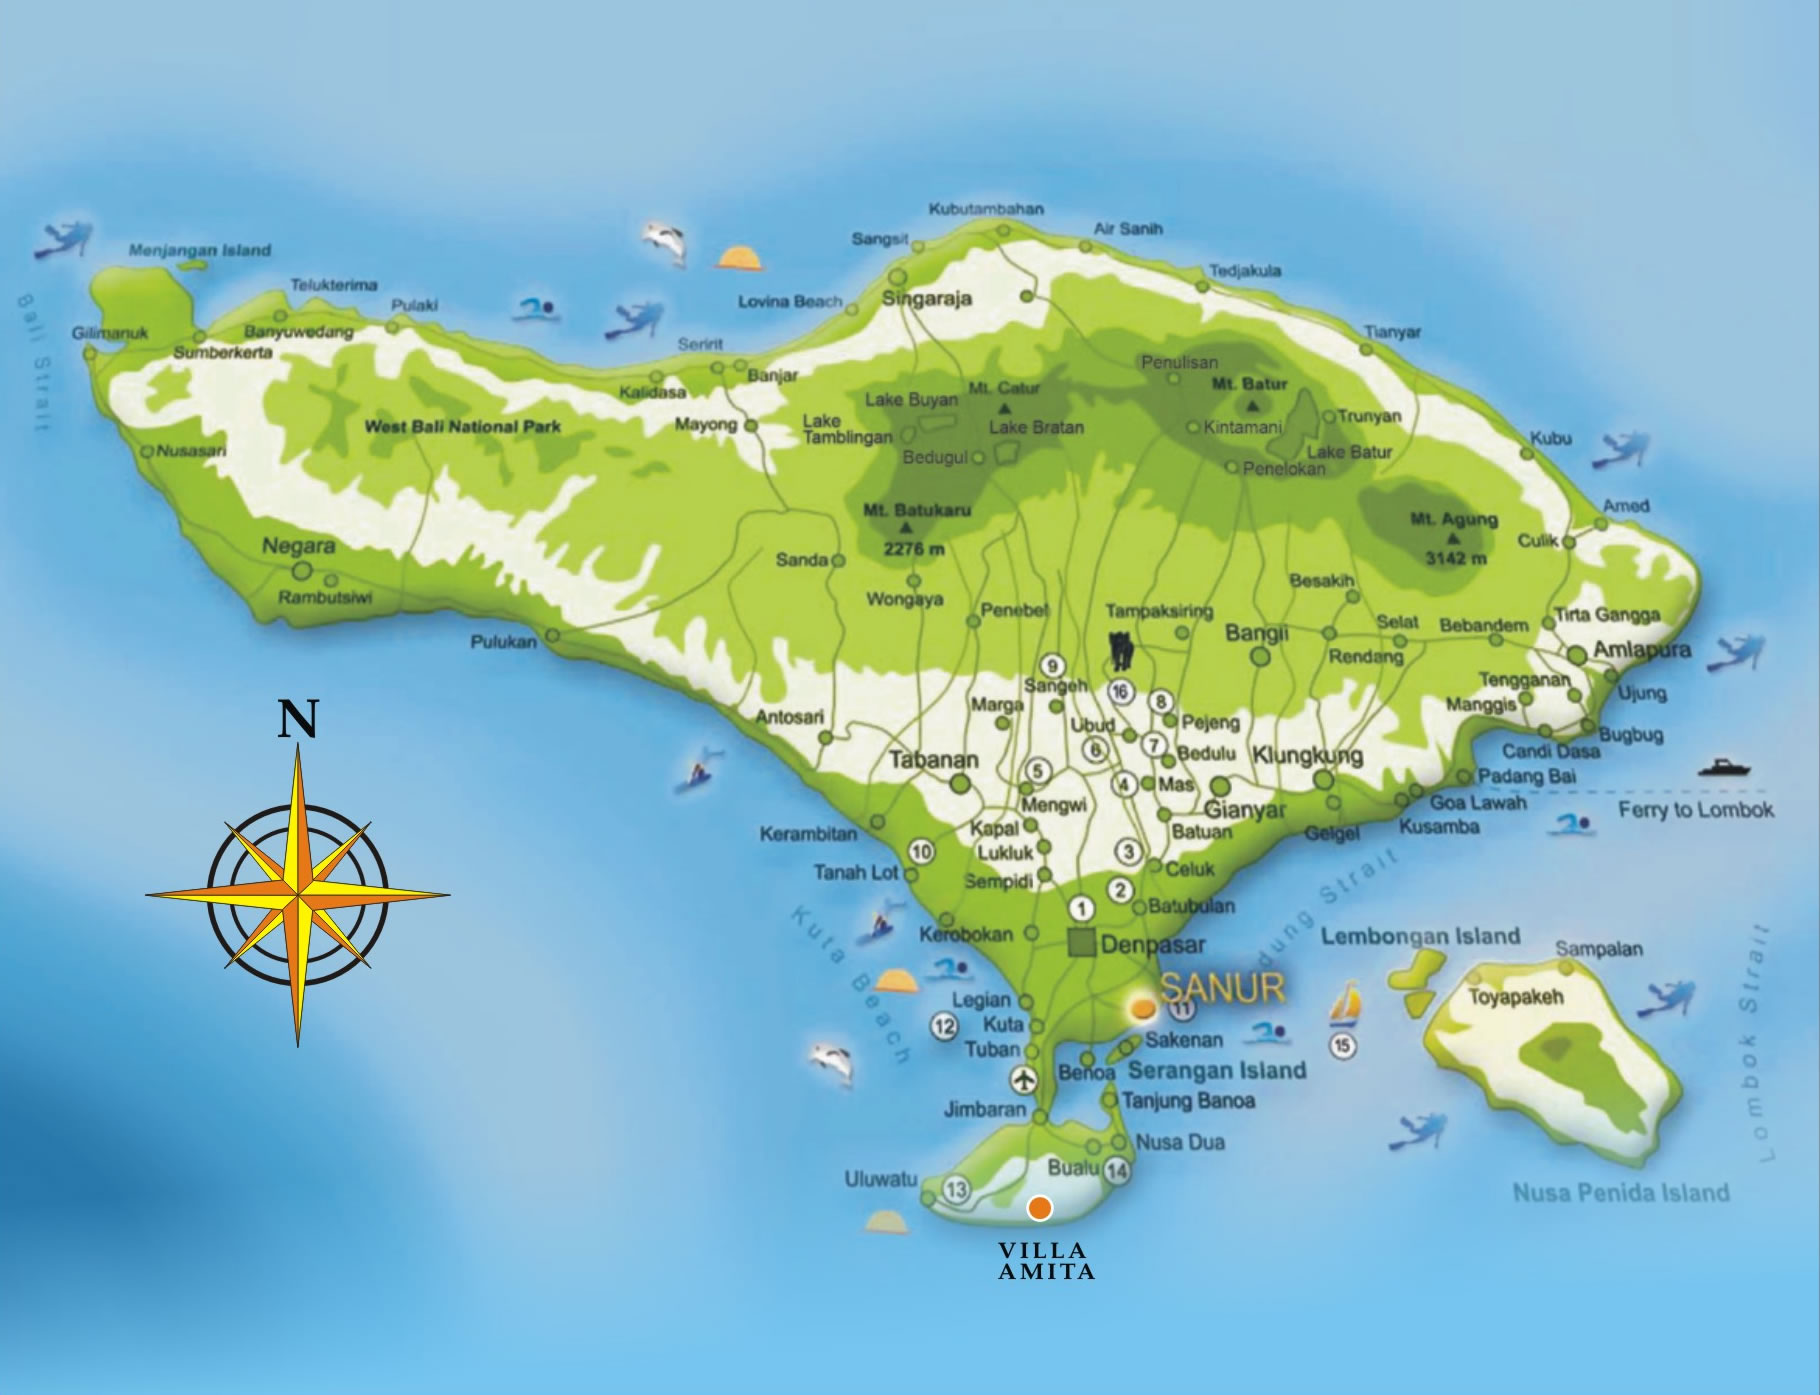 Map / location of Villa Amita, Bali